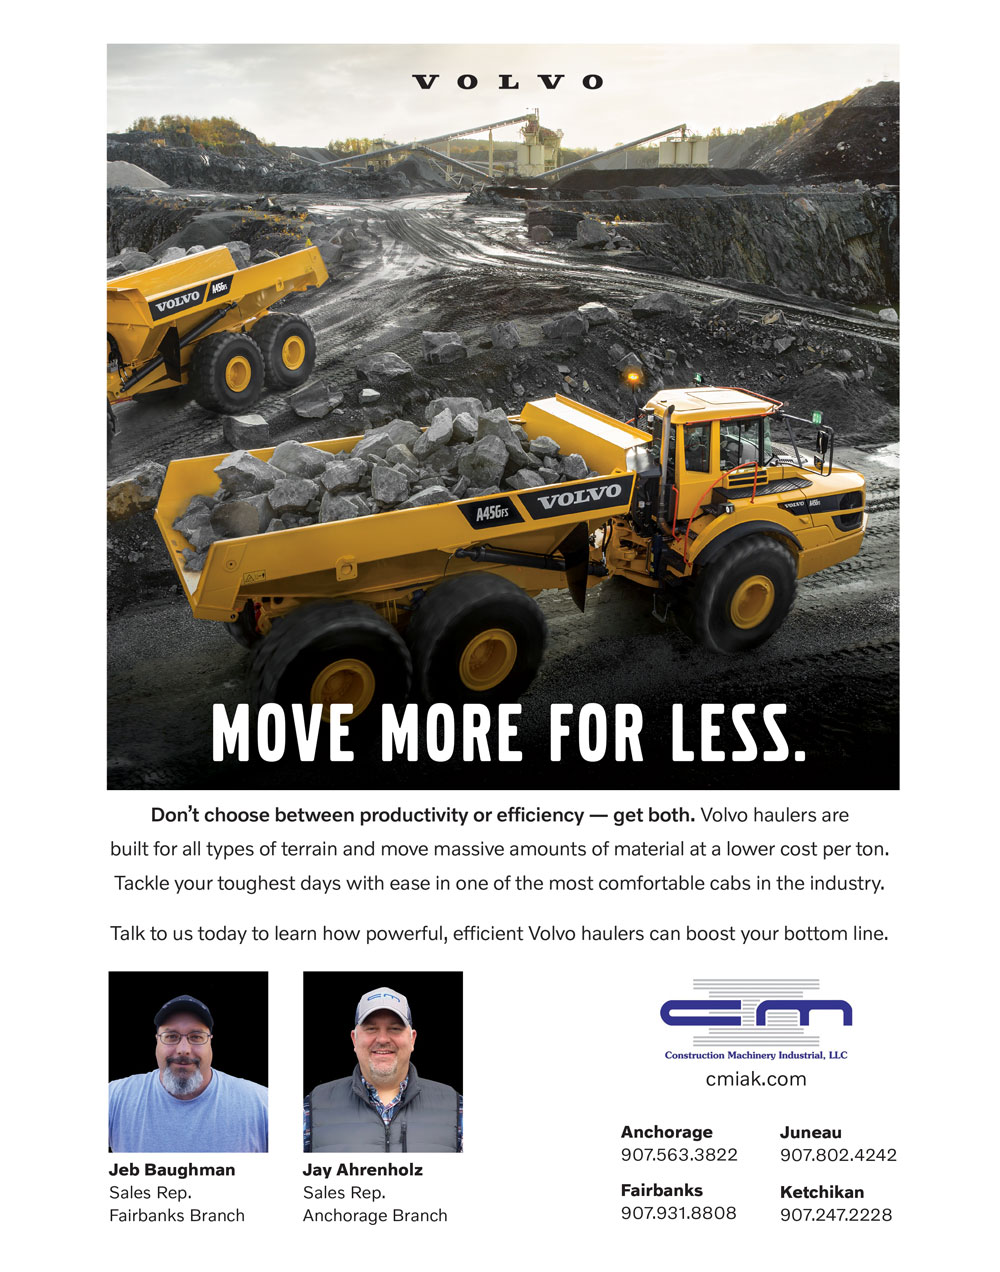 Construction Machinery Industrial LLC Advertisement